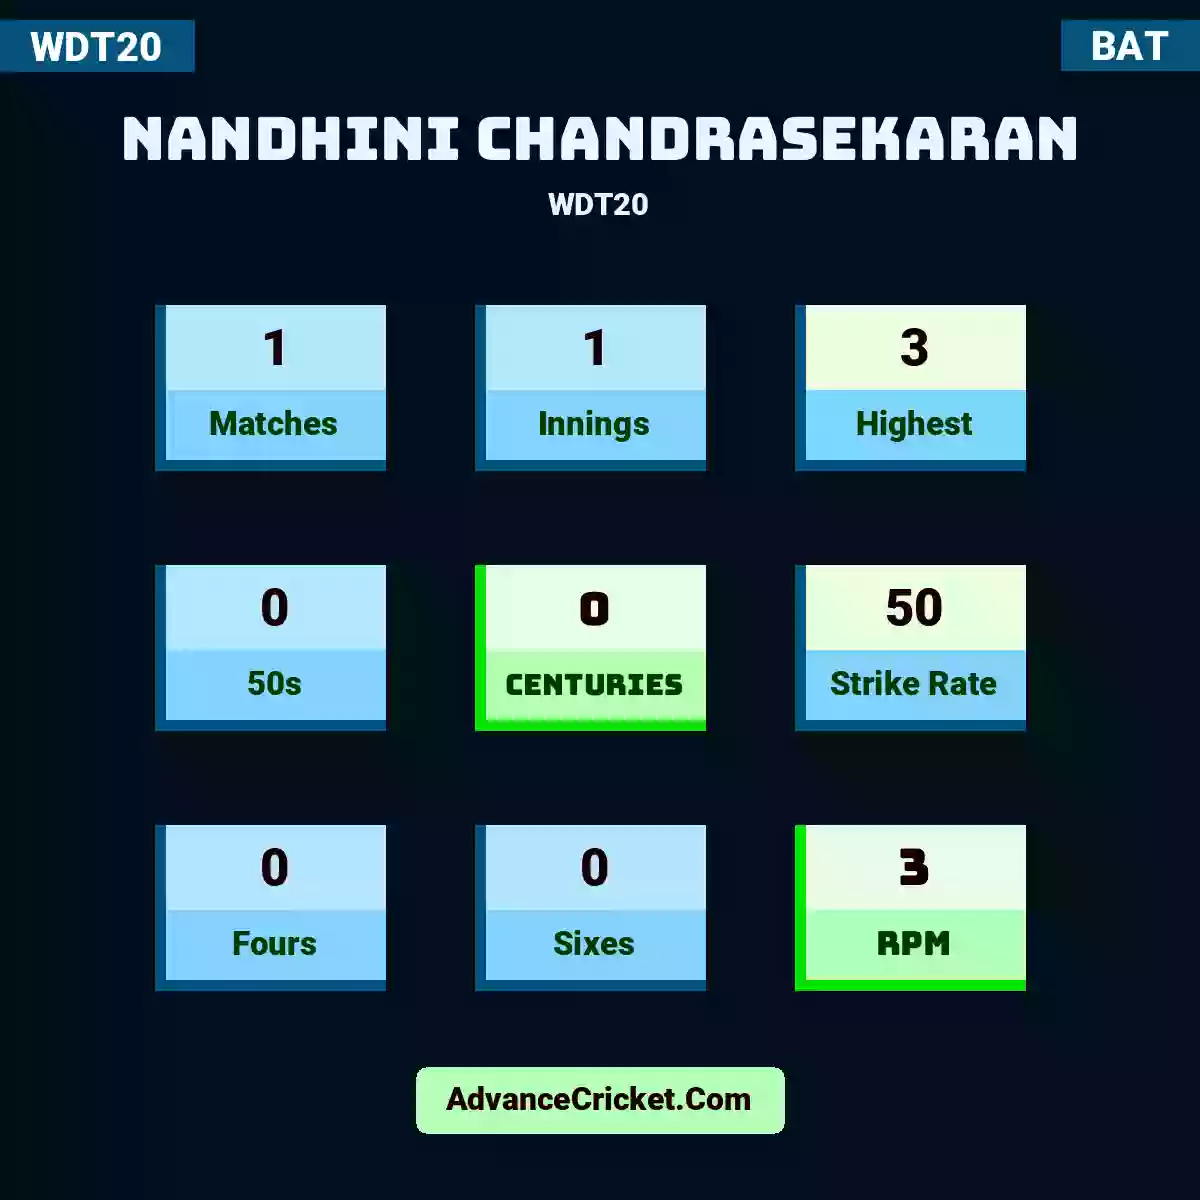 Nandhini Chandrasekaran WDT20 , Nandhini Chandrasekaran played 1 matches, scored 3 runs as highest, 0 half-centuries, and 0 centuries, with a strike rate of 50. N.Chandrasekaran hit 0 fours and 0 sixes, with an RPM of 3.